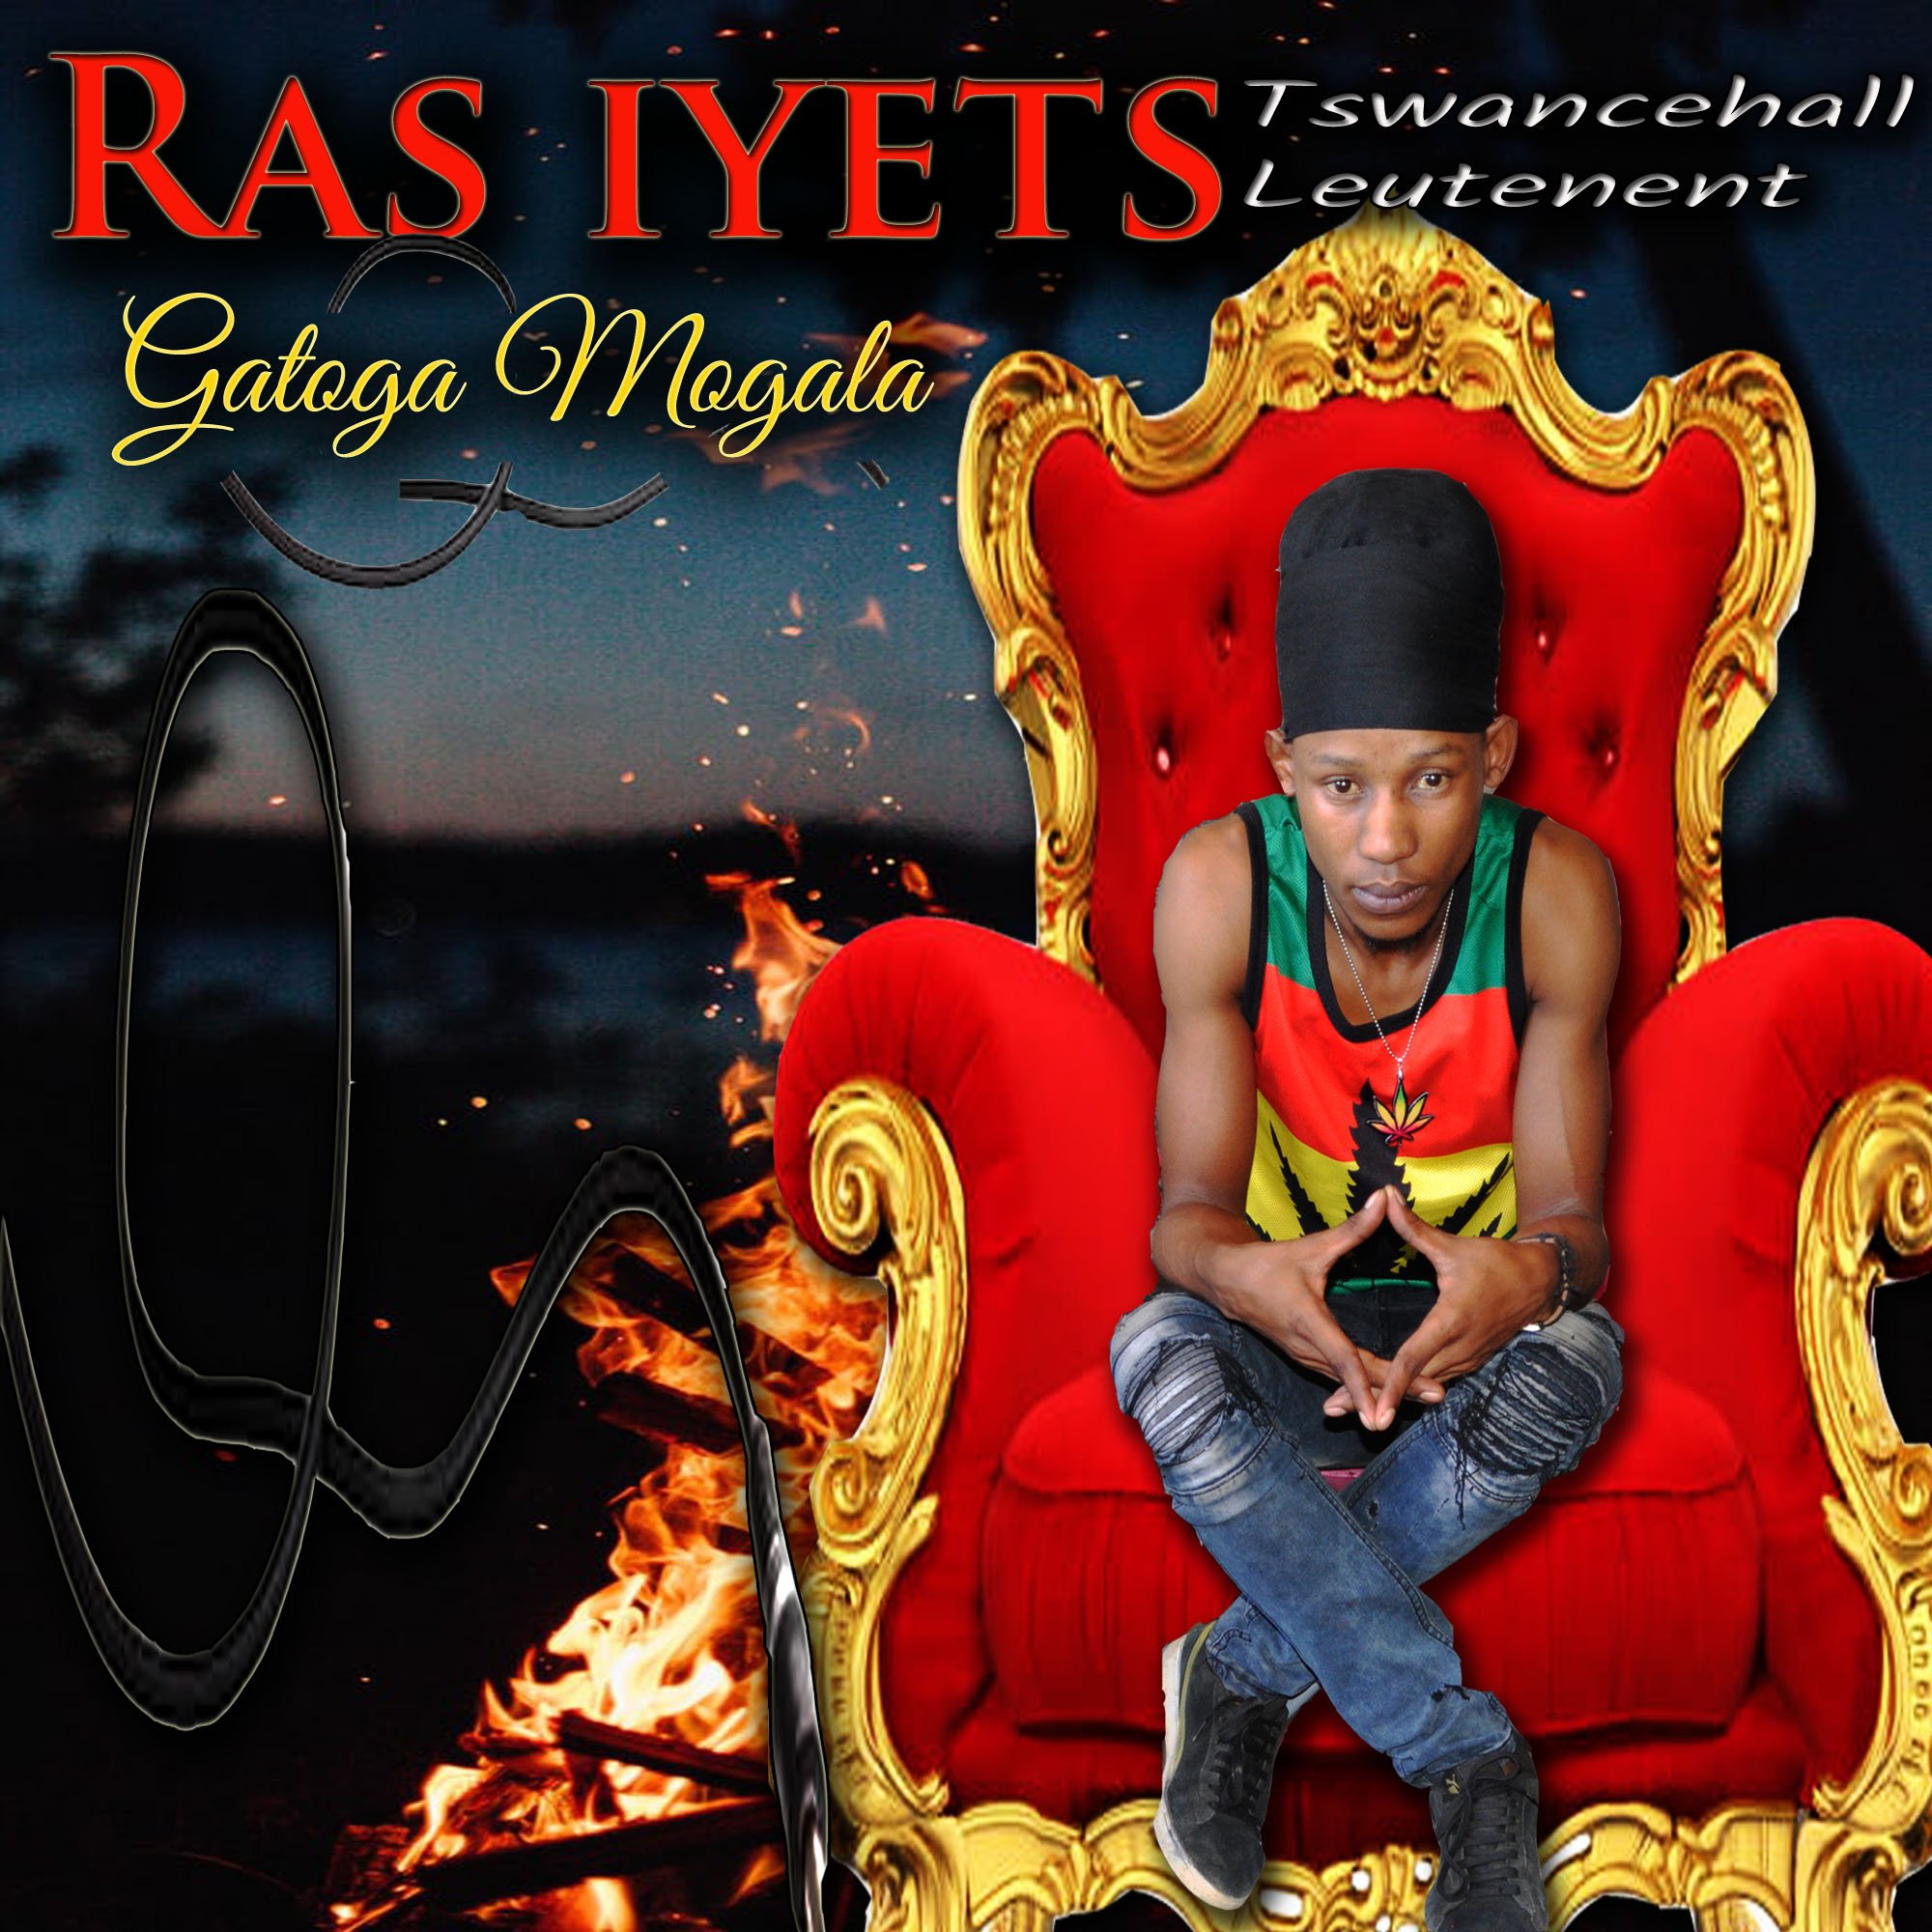 Ras Iyets Releases "Gatoga Mogala" The Album